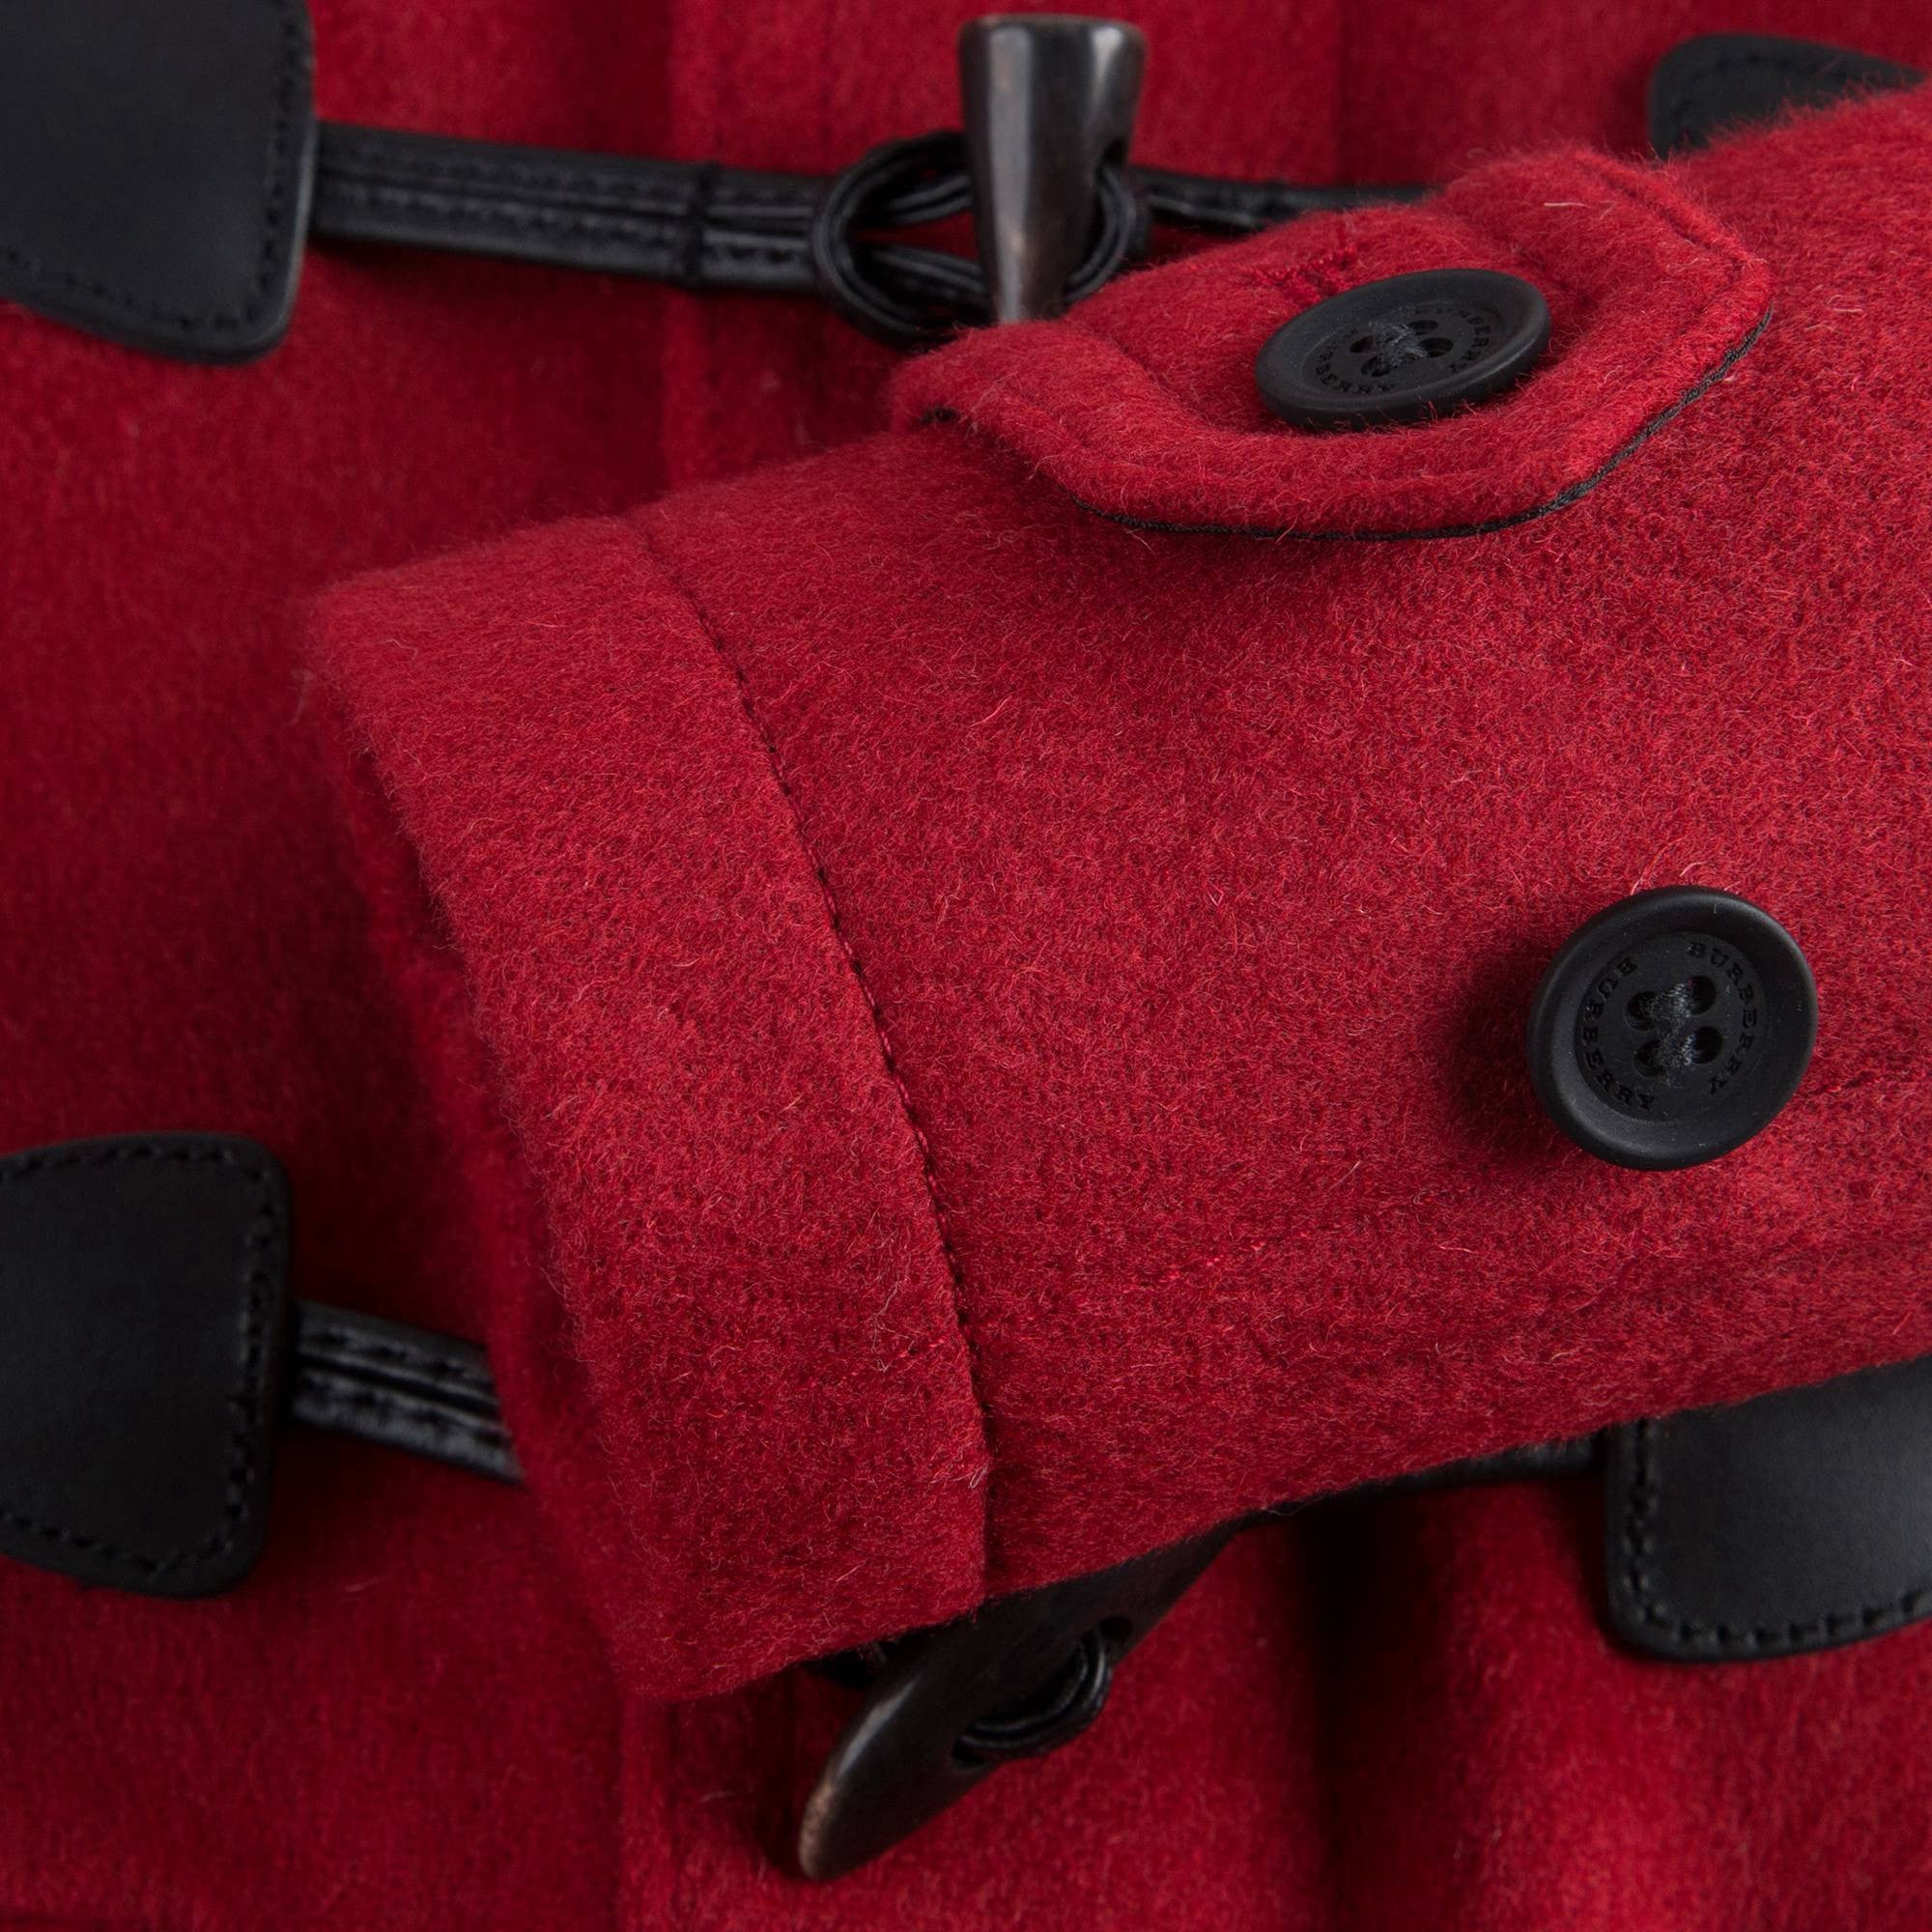 Boys & Girls Red Wool Duffle Coat